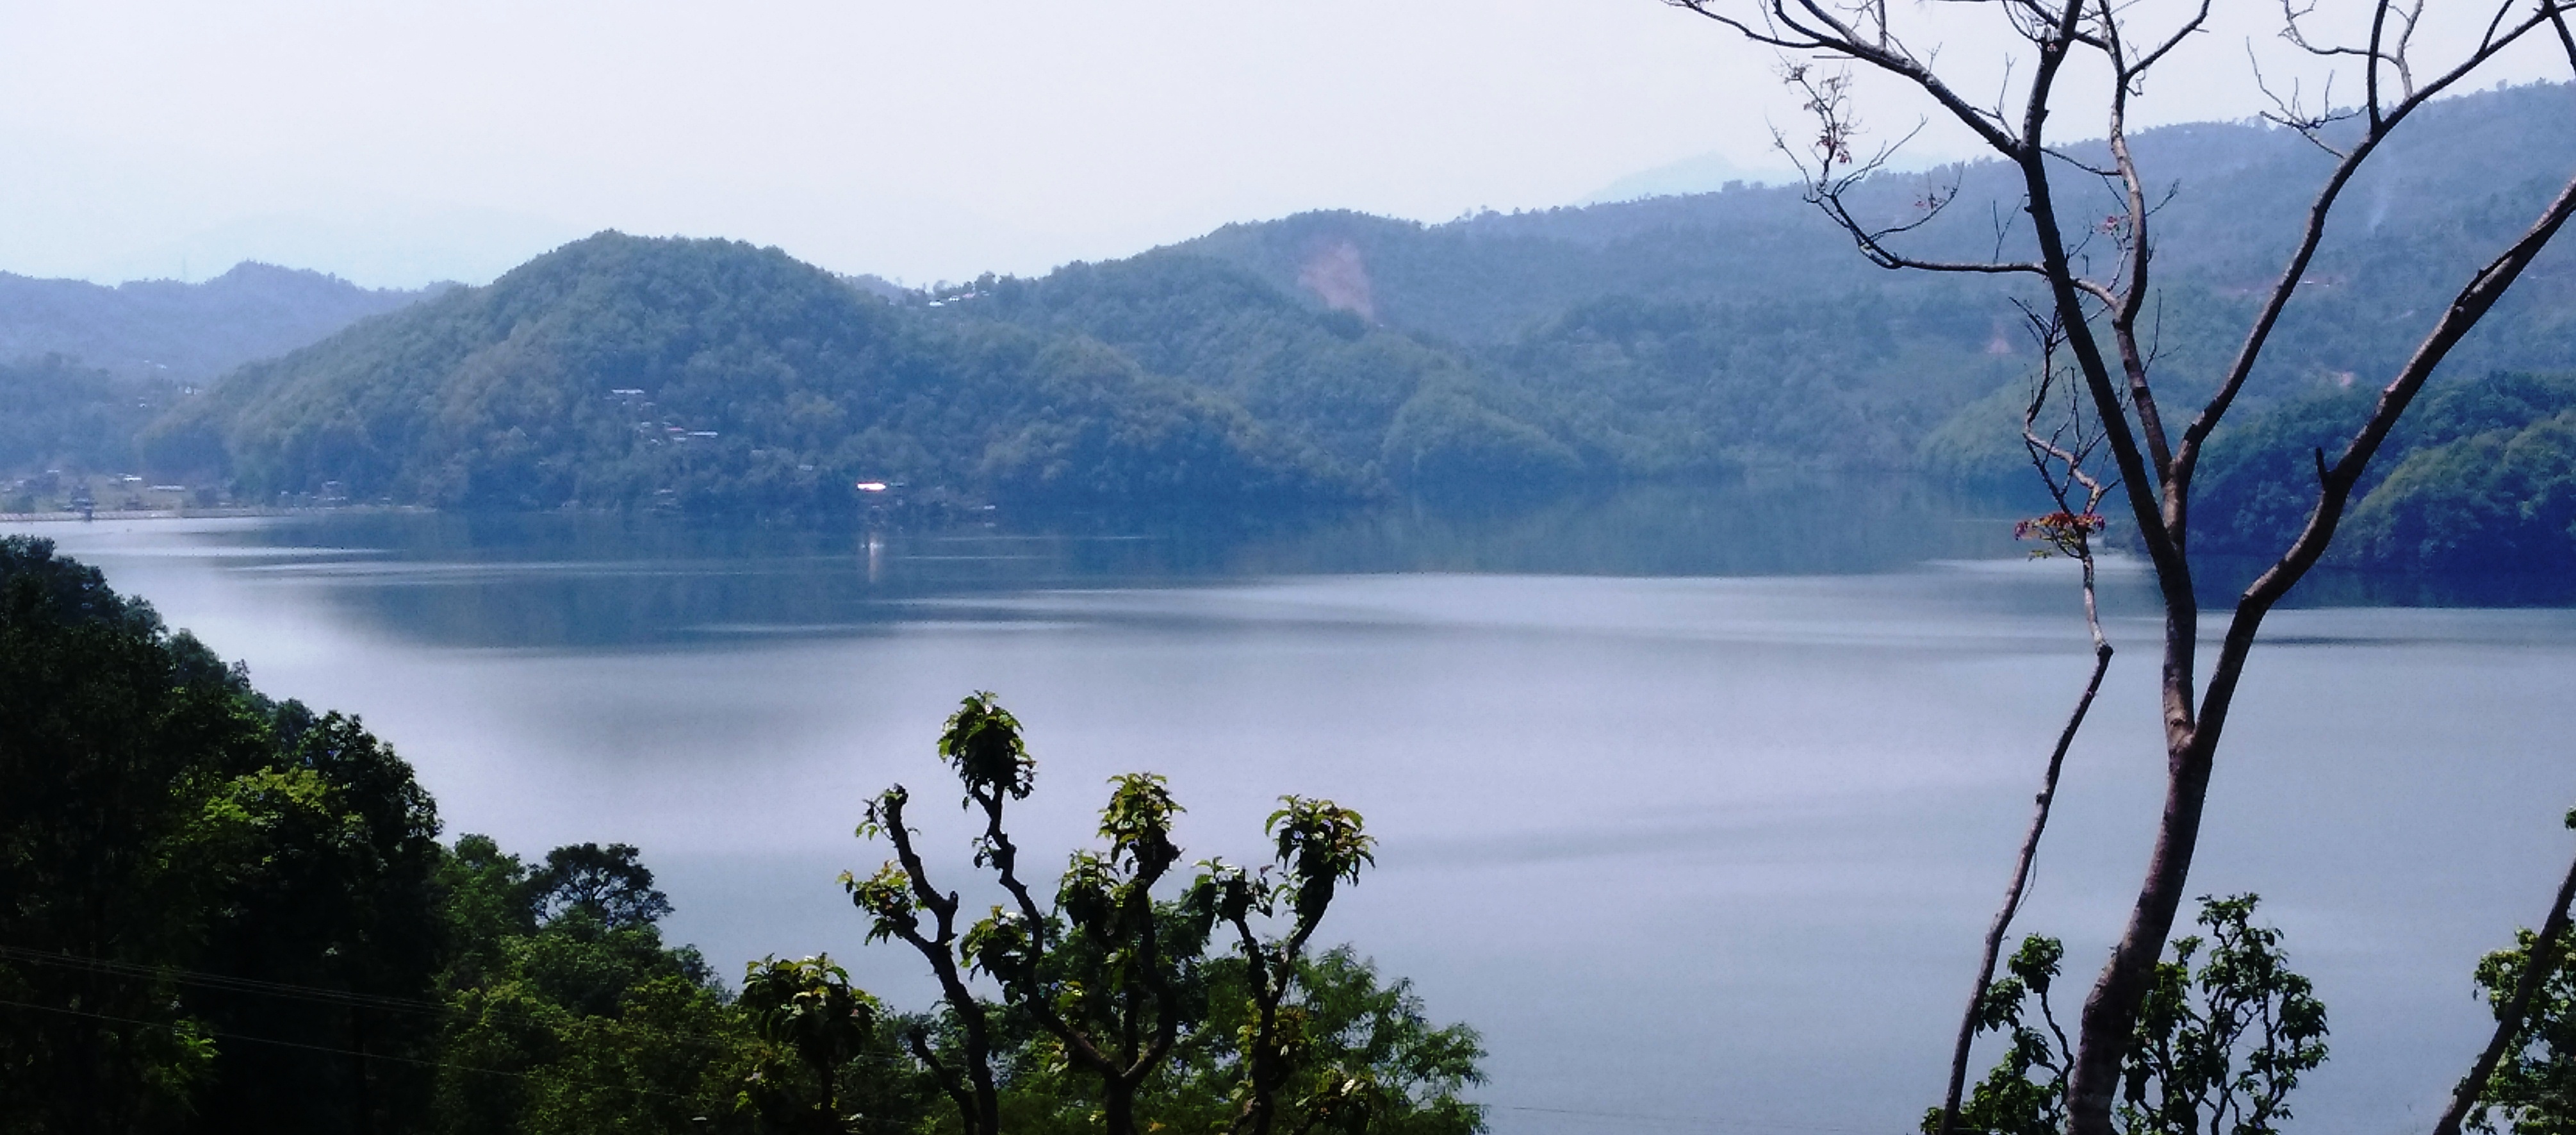 begnas-and-khaste-lake-premises-in-pokhara-wear-deserted-look-photo-feature